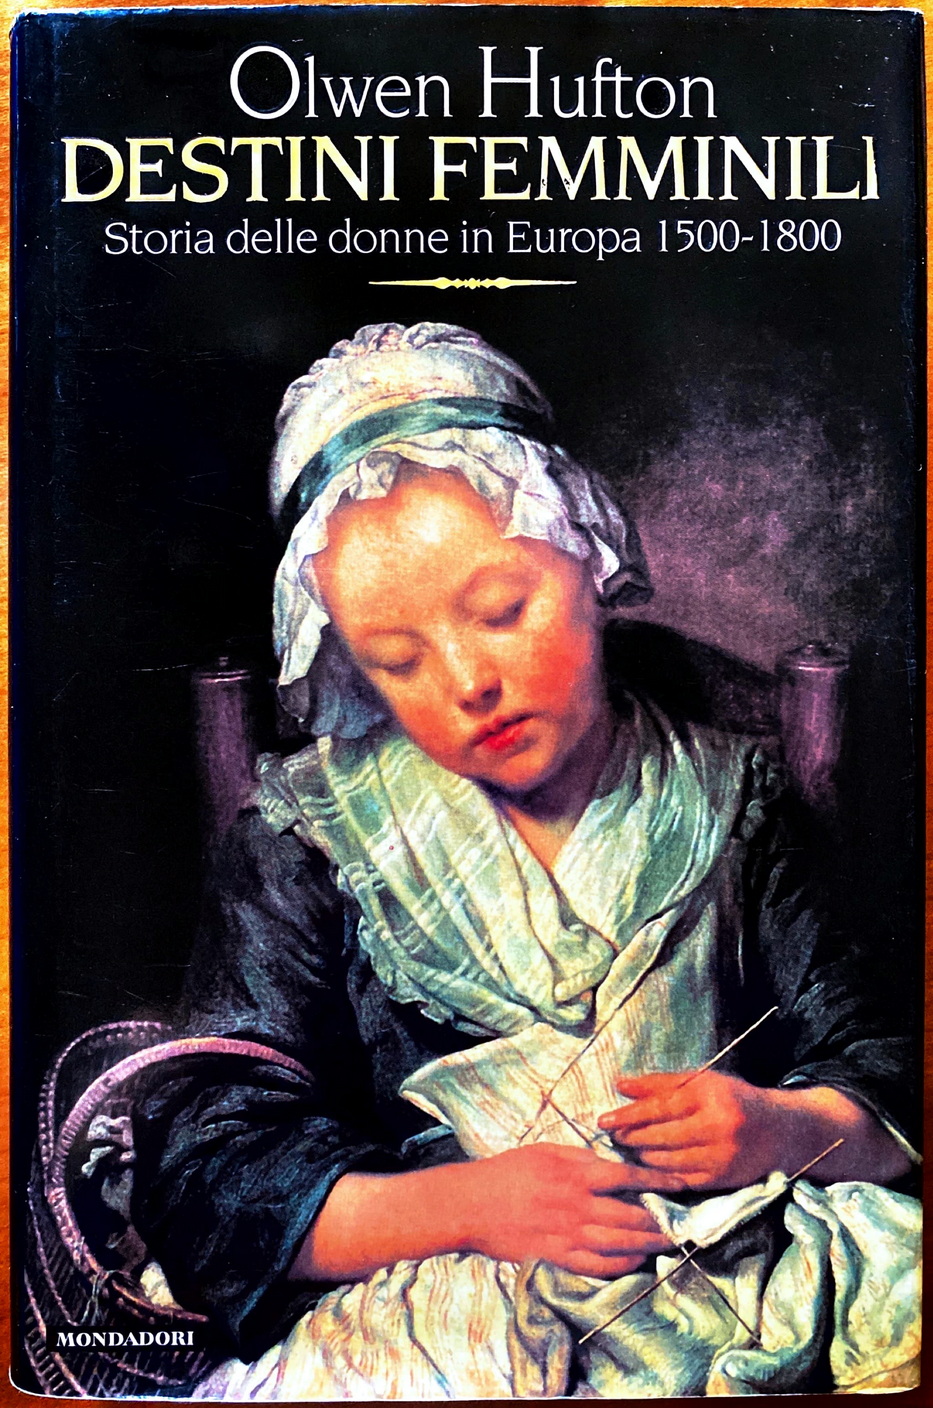 Olwen Hufton, Destini femminili. Storia delle donne in Europa [1500-1800], Ed. Mondadori, 1996